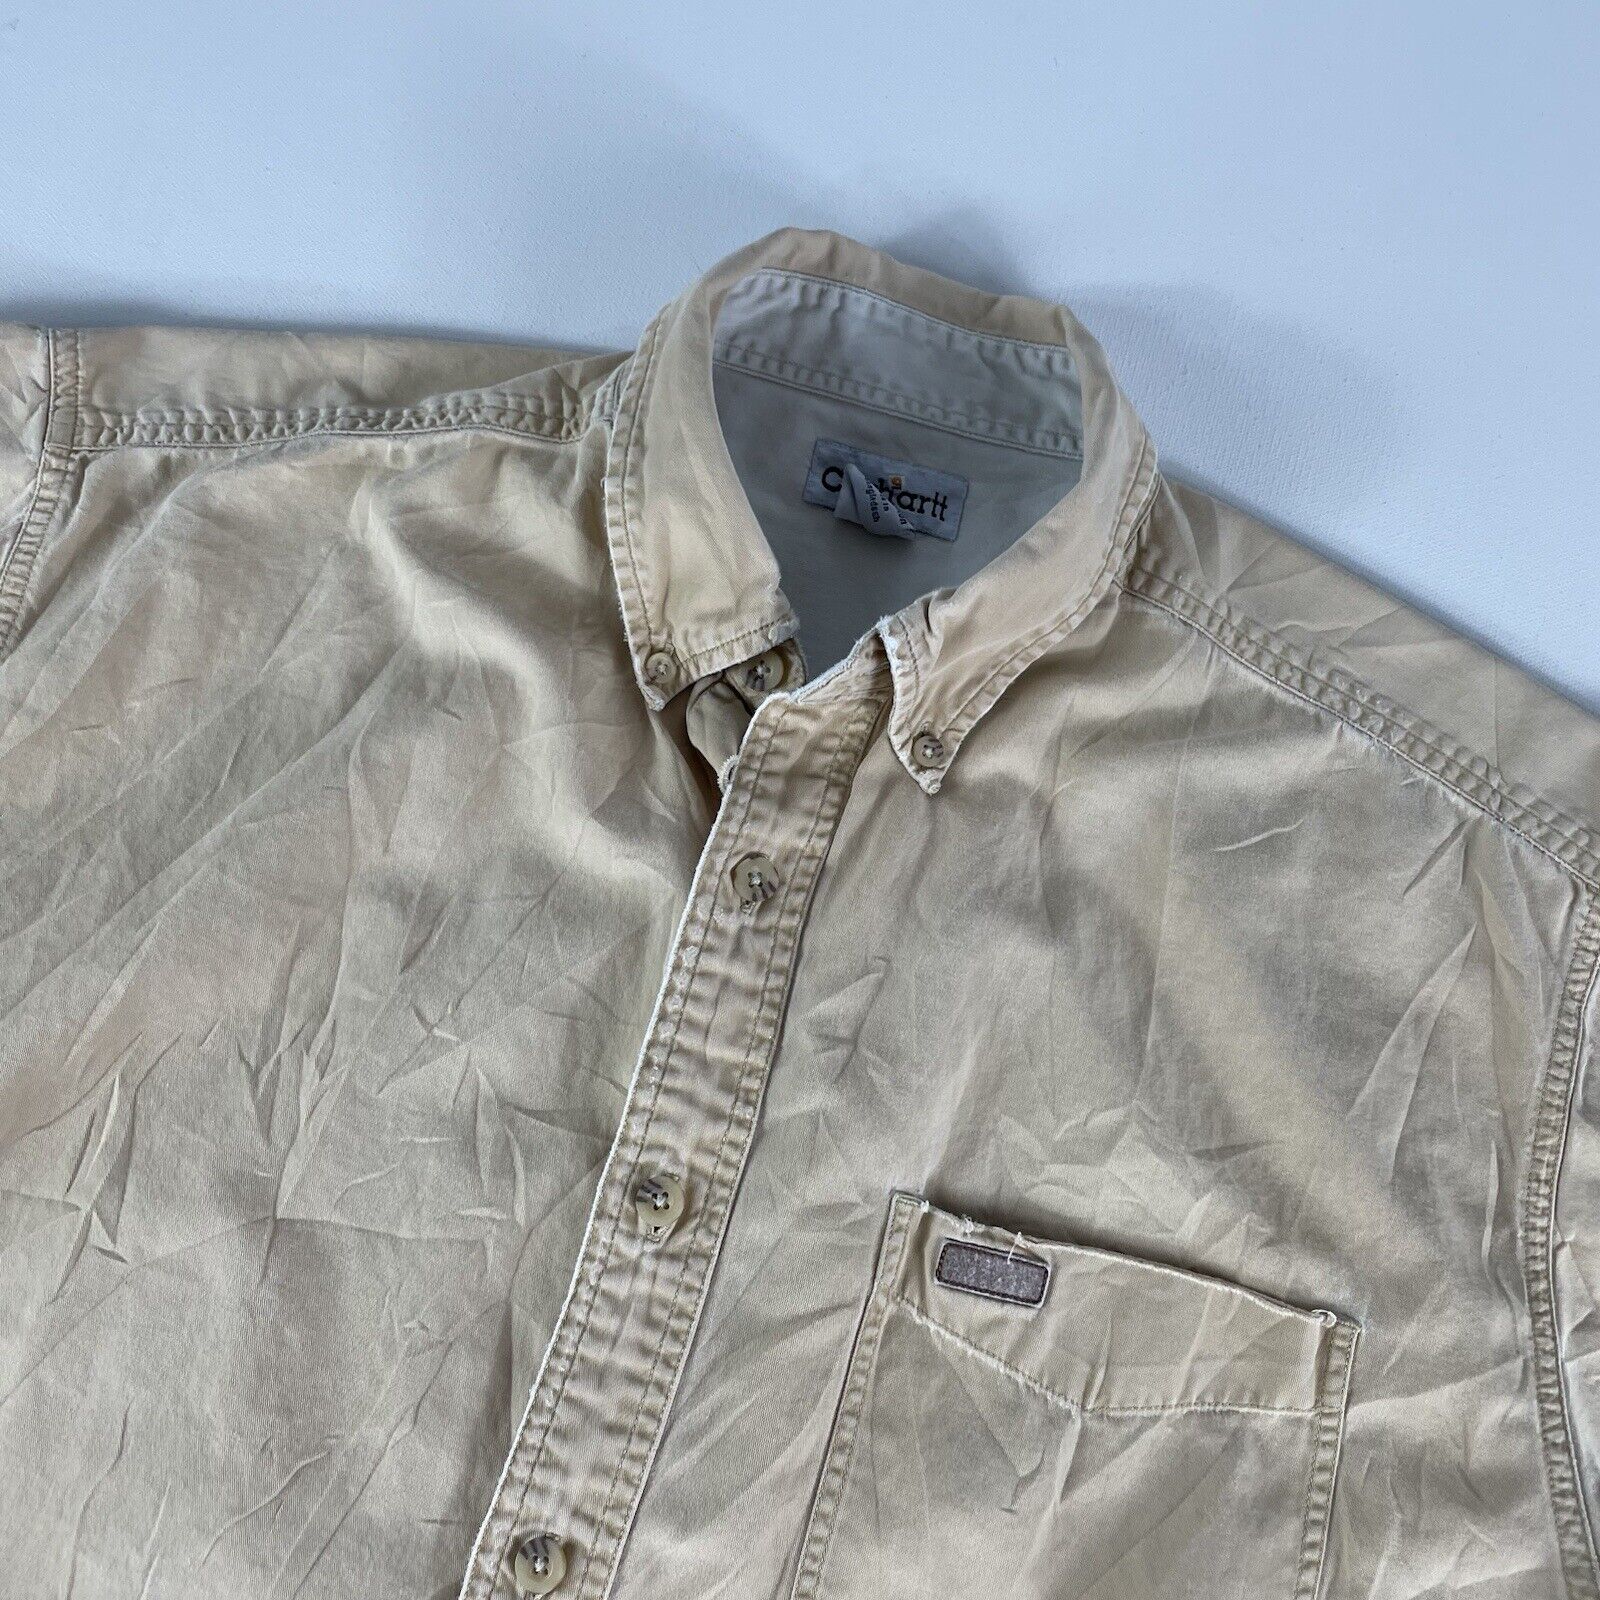 Carhartt Button Down Up Shirt Adult Large Tan Short Sleeve Cotton S132 Mens